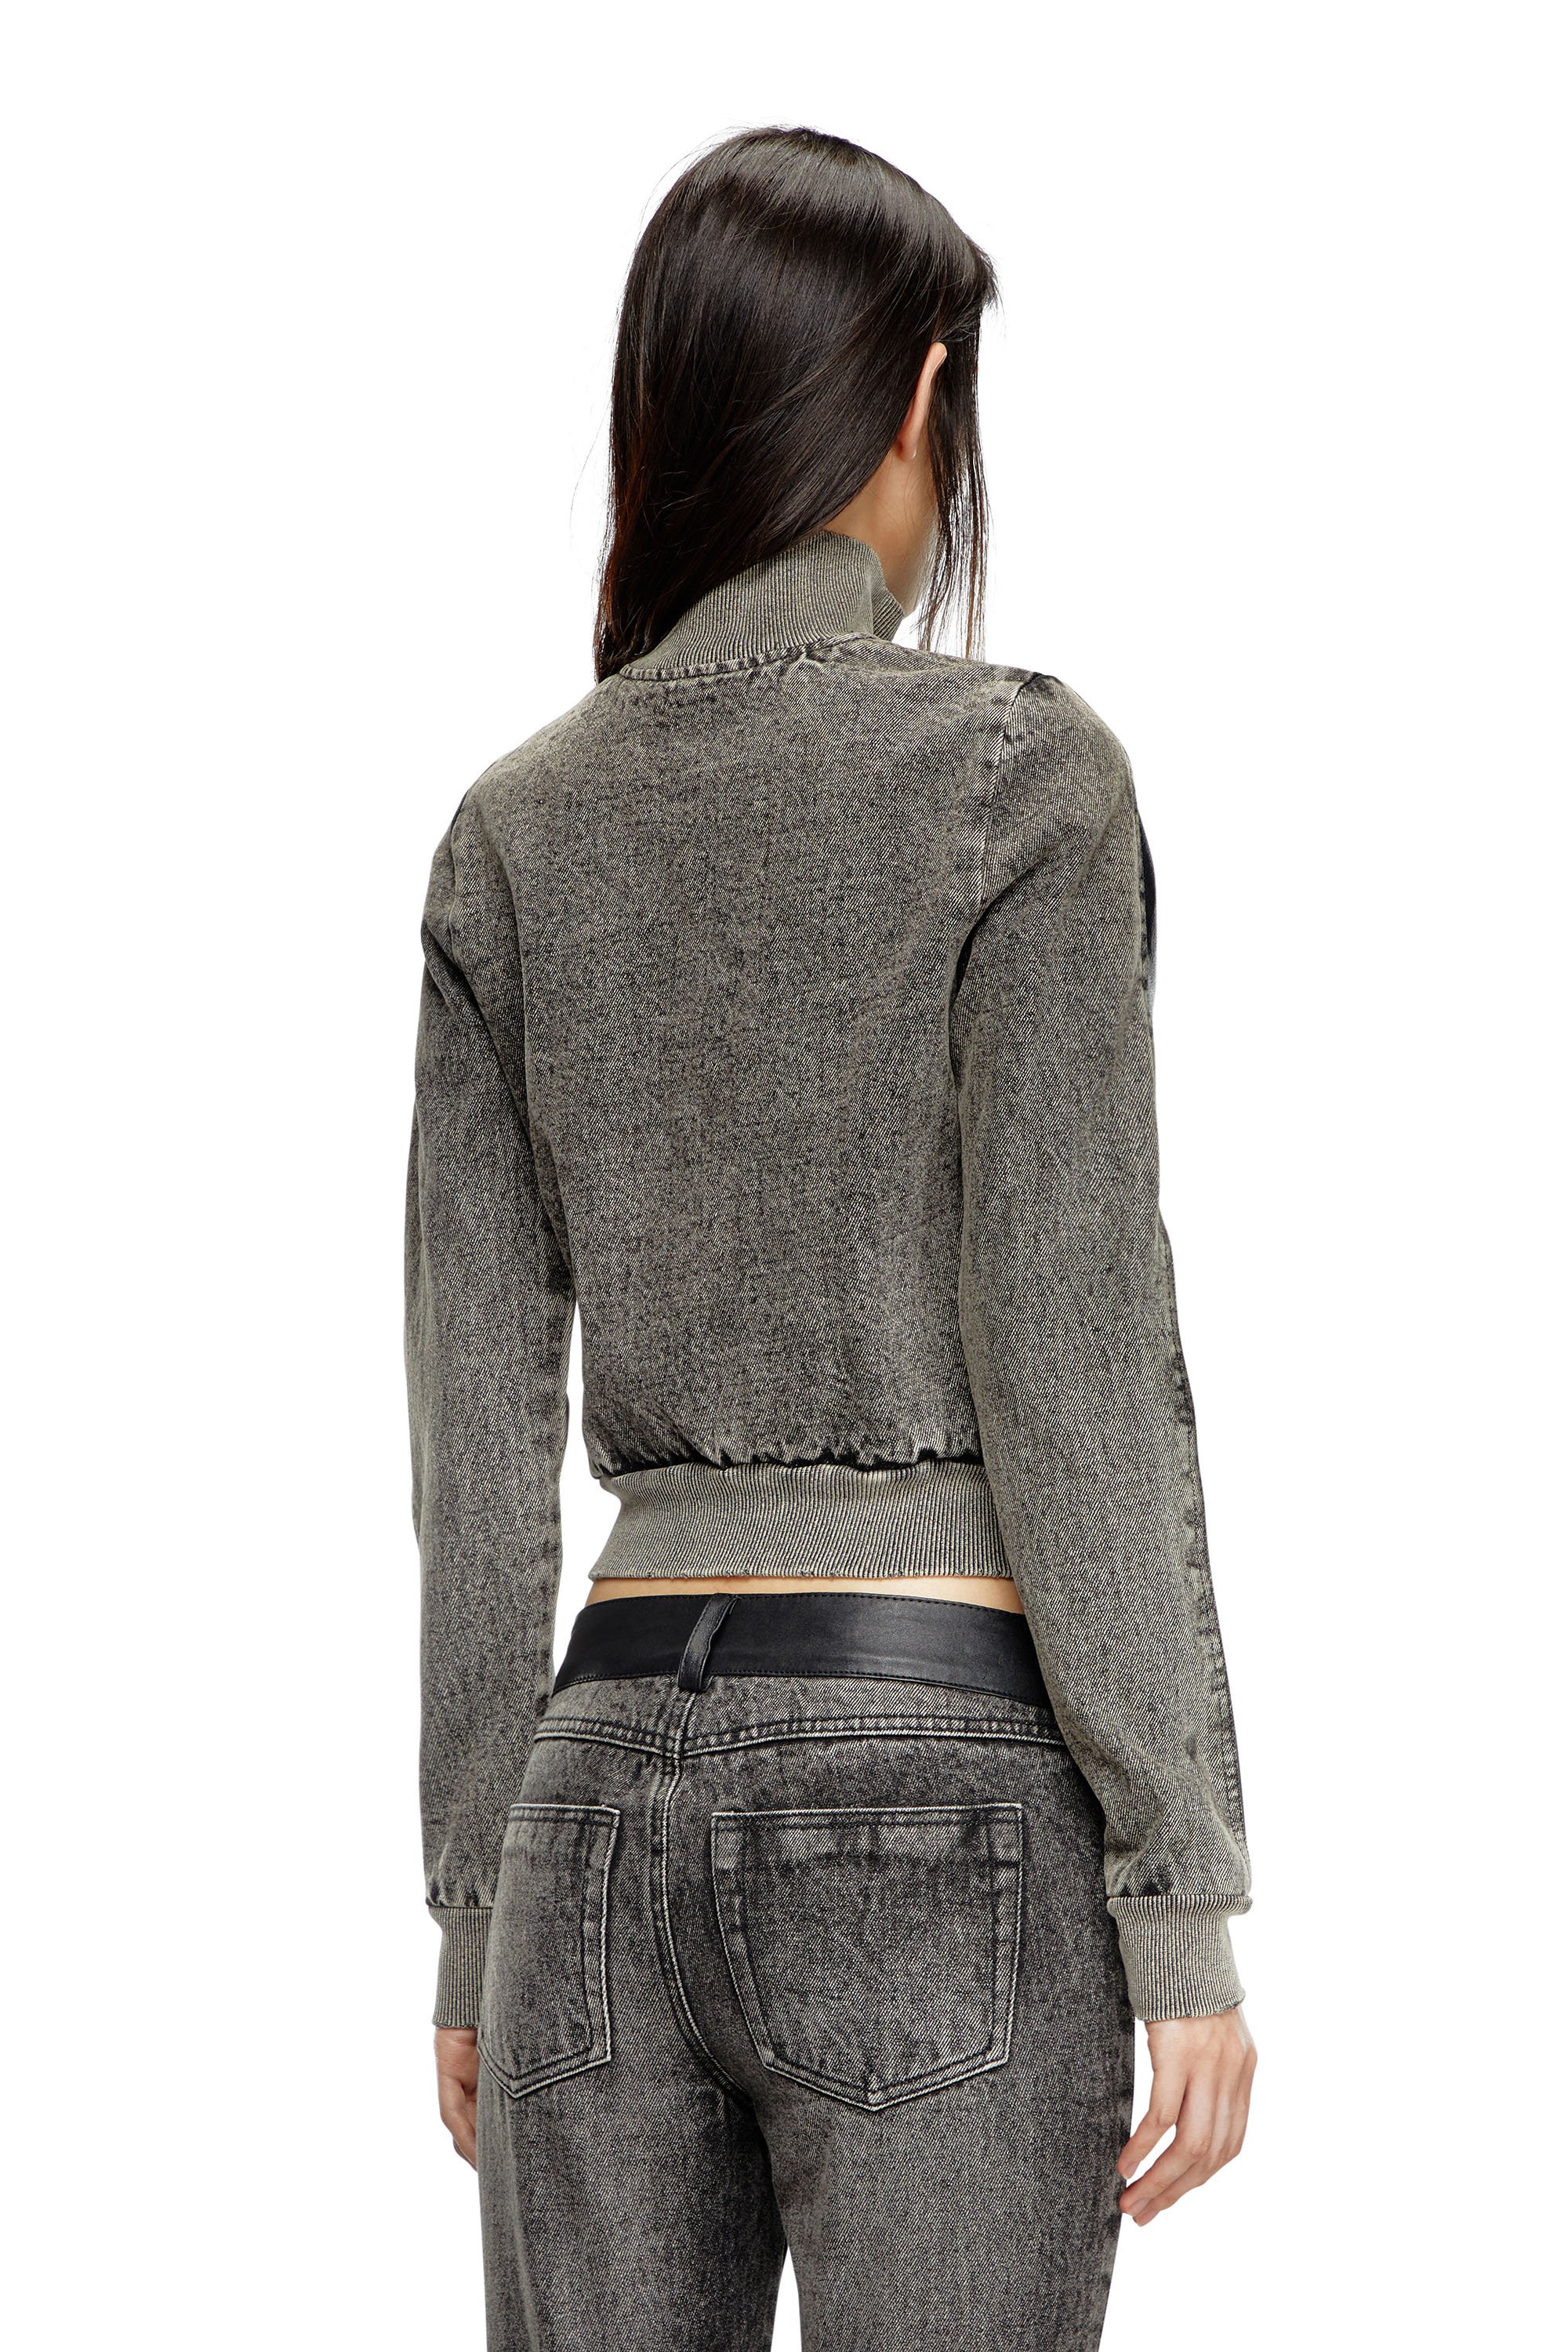 Diesel - L-EADER, Woman Hybrid jacket in leather and denim in Black - Image 4